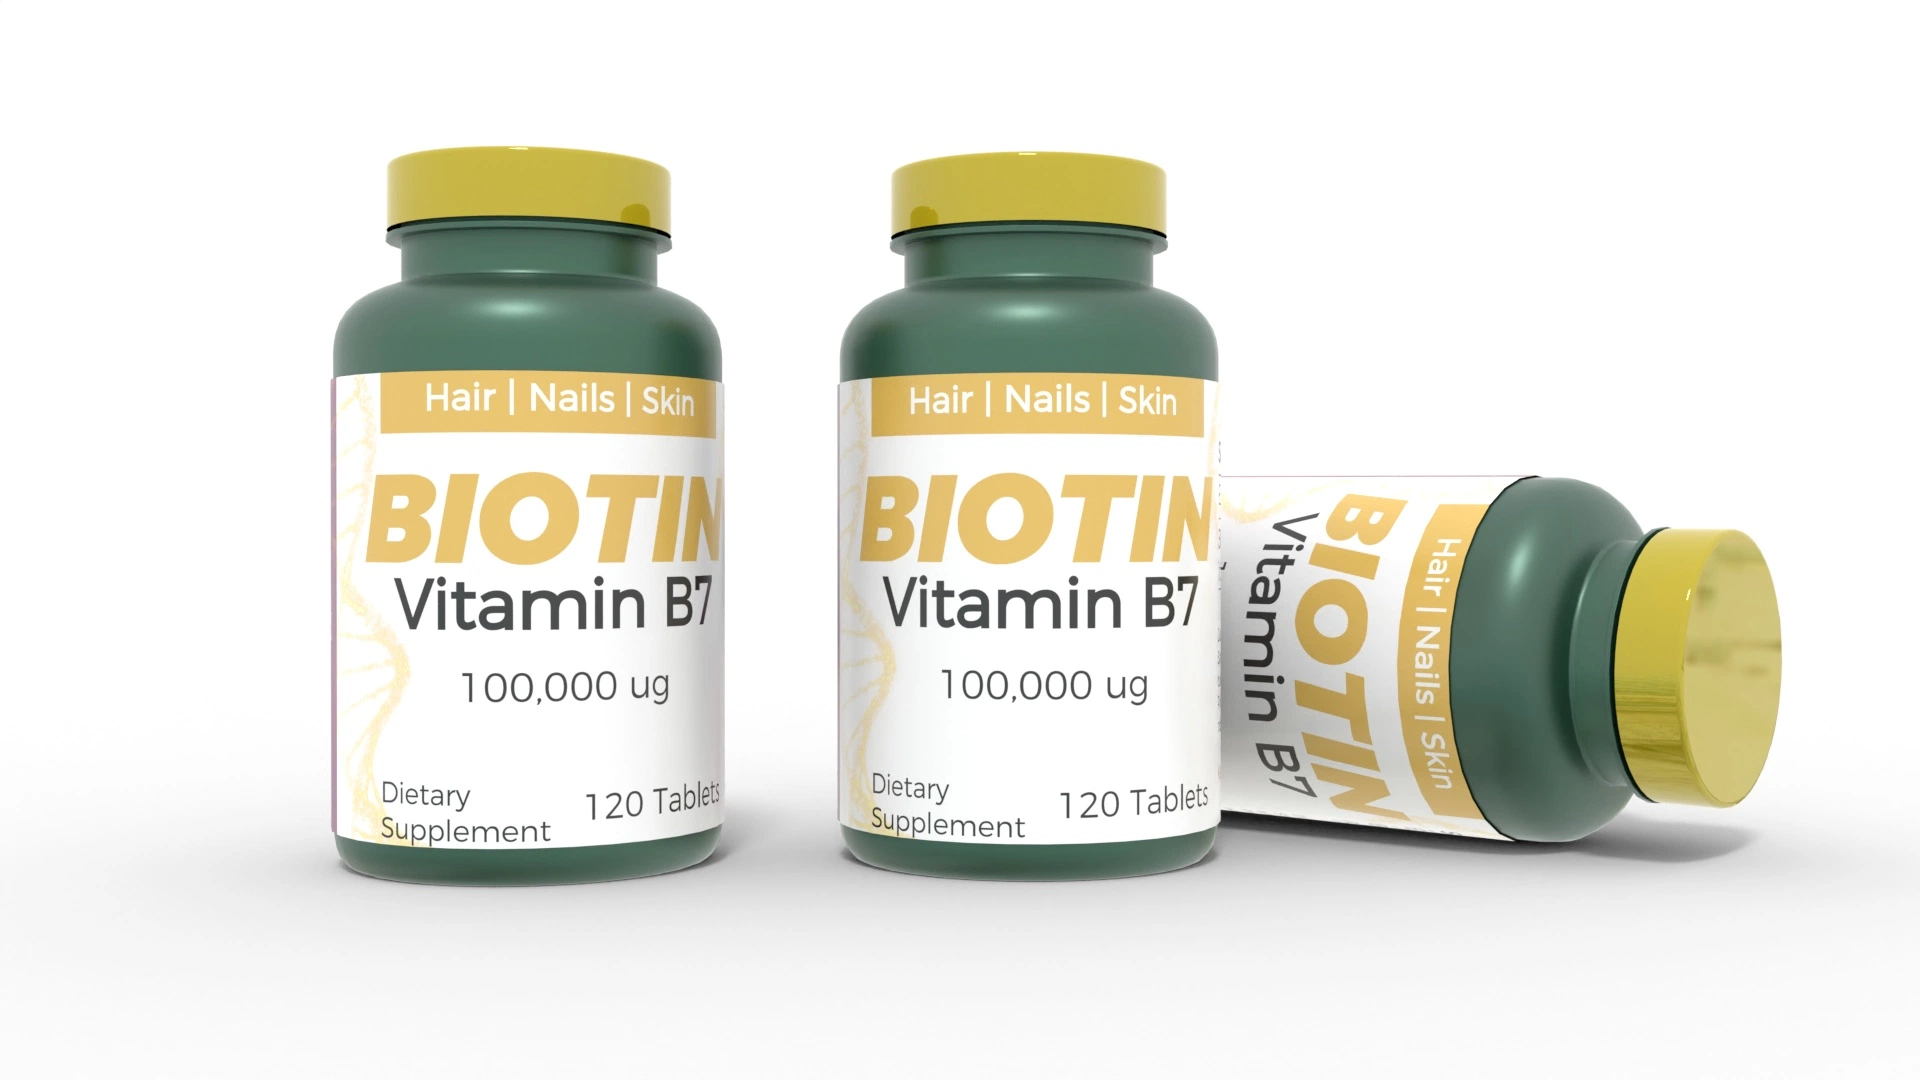 Suplemento de salud de las uñas La piel de tabletas de vitamina B7 Dmscare-Biotin tabletas de la biotina